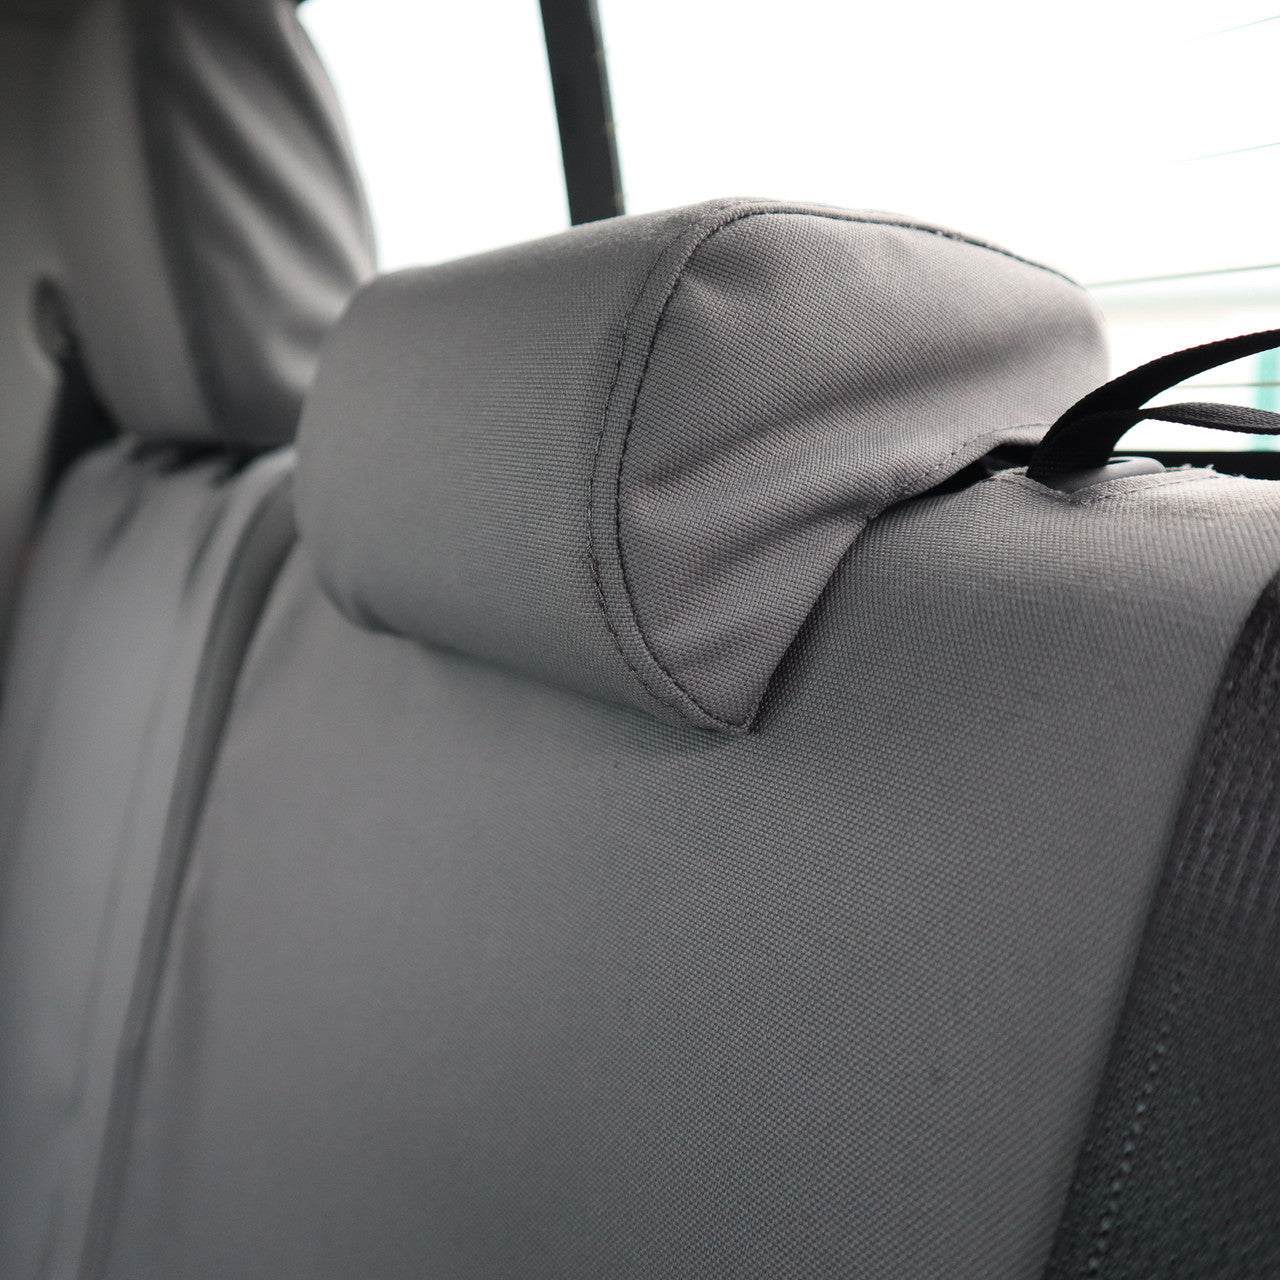 Toughest heavy duty Toyota Tundra Seat Covers.